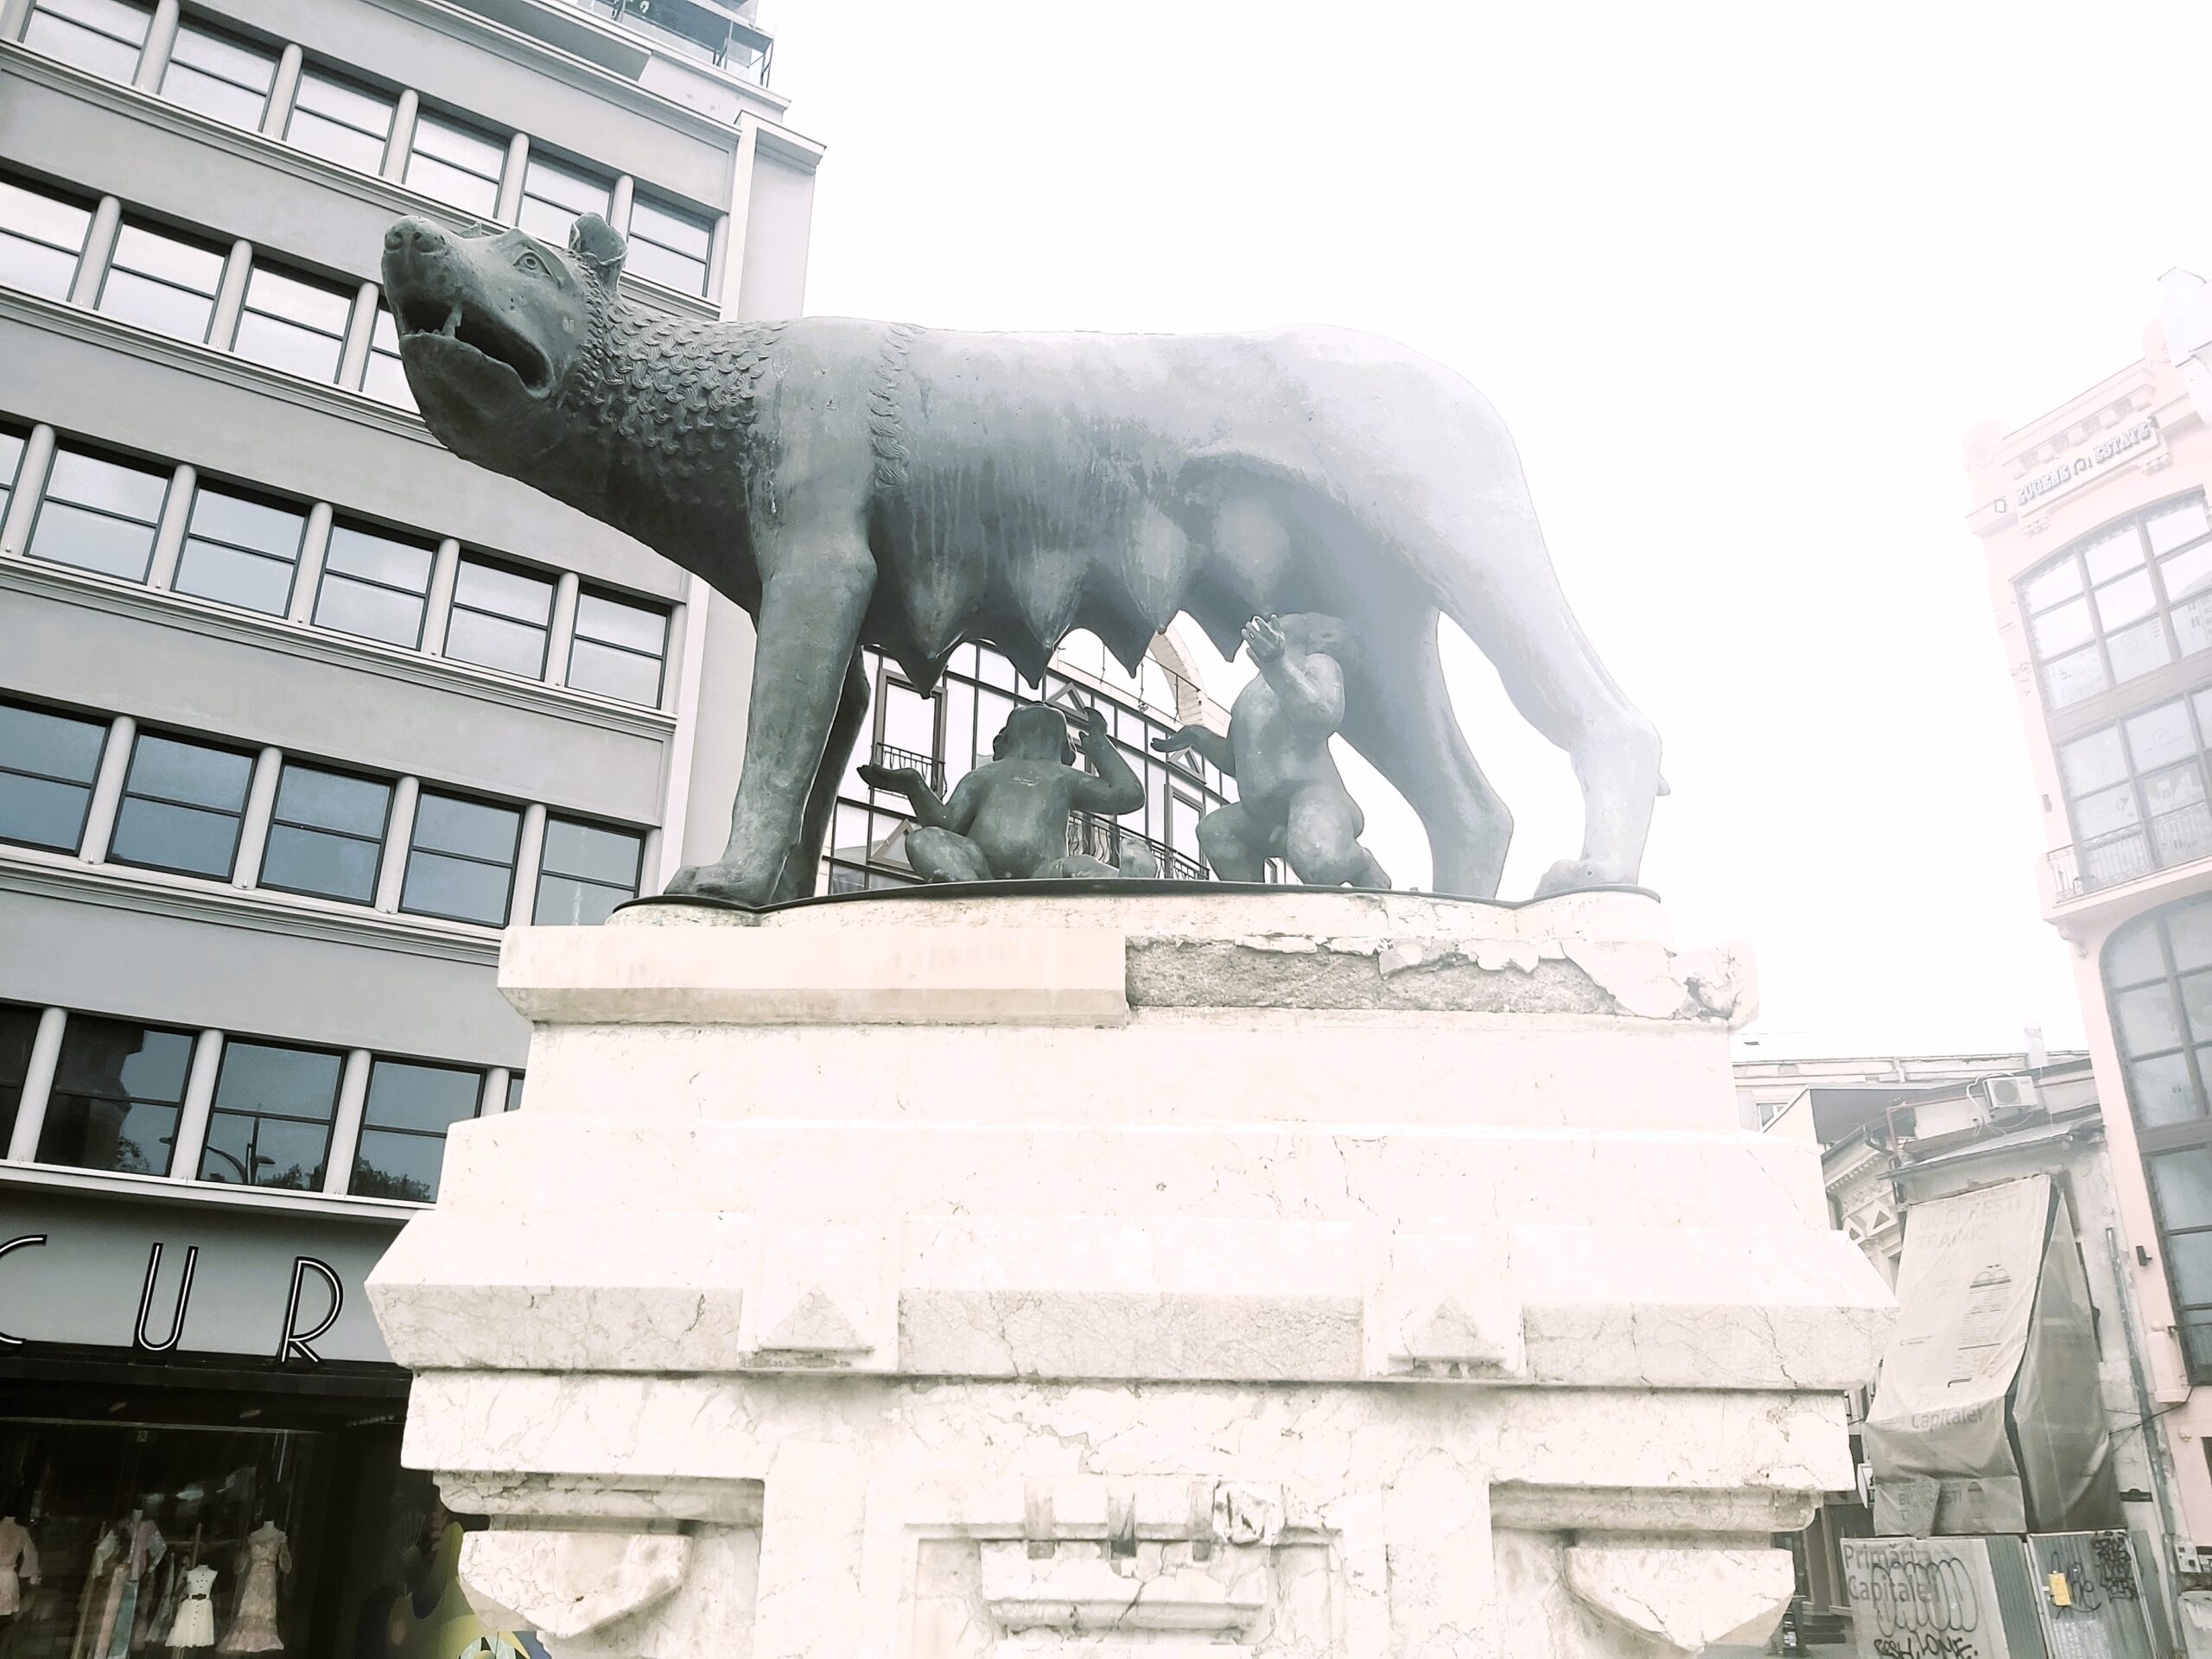 A close up of the wolf statue in București, Romania